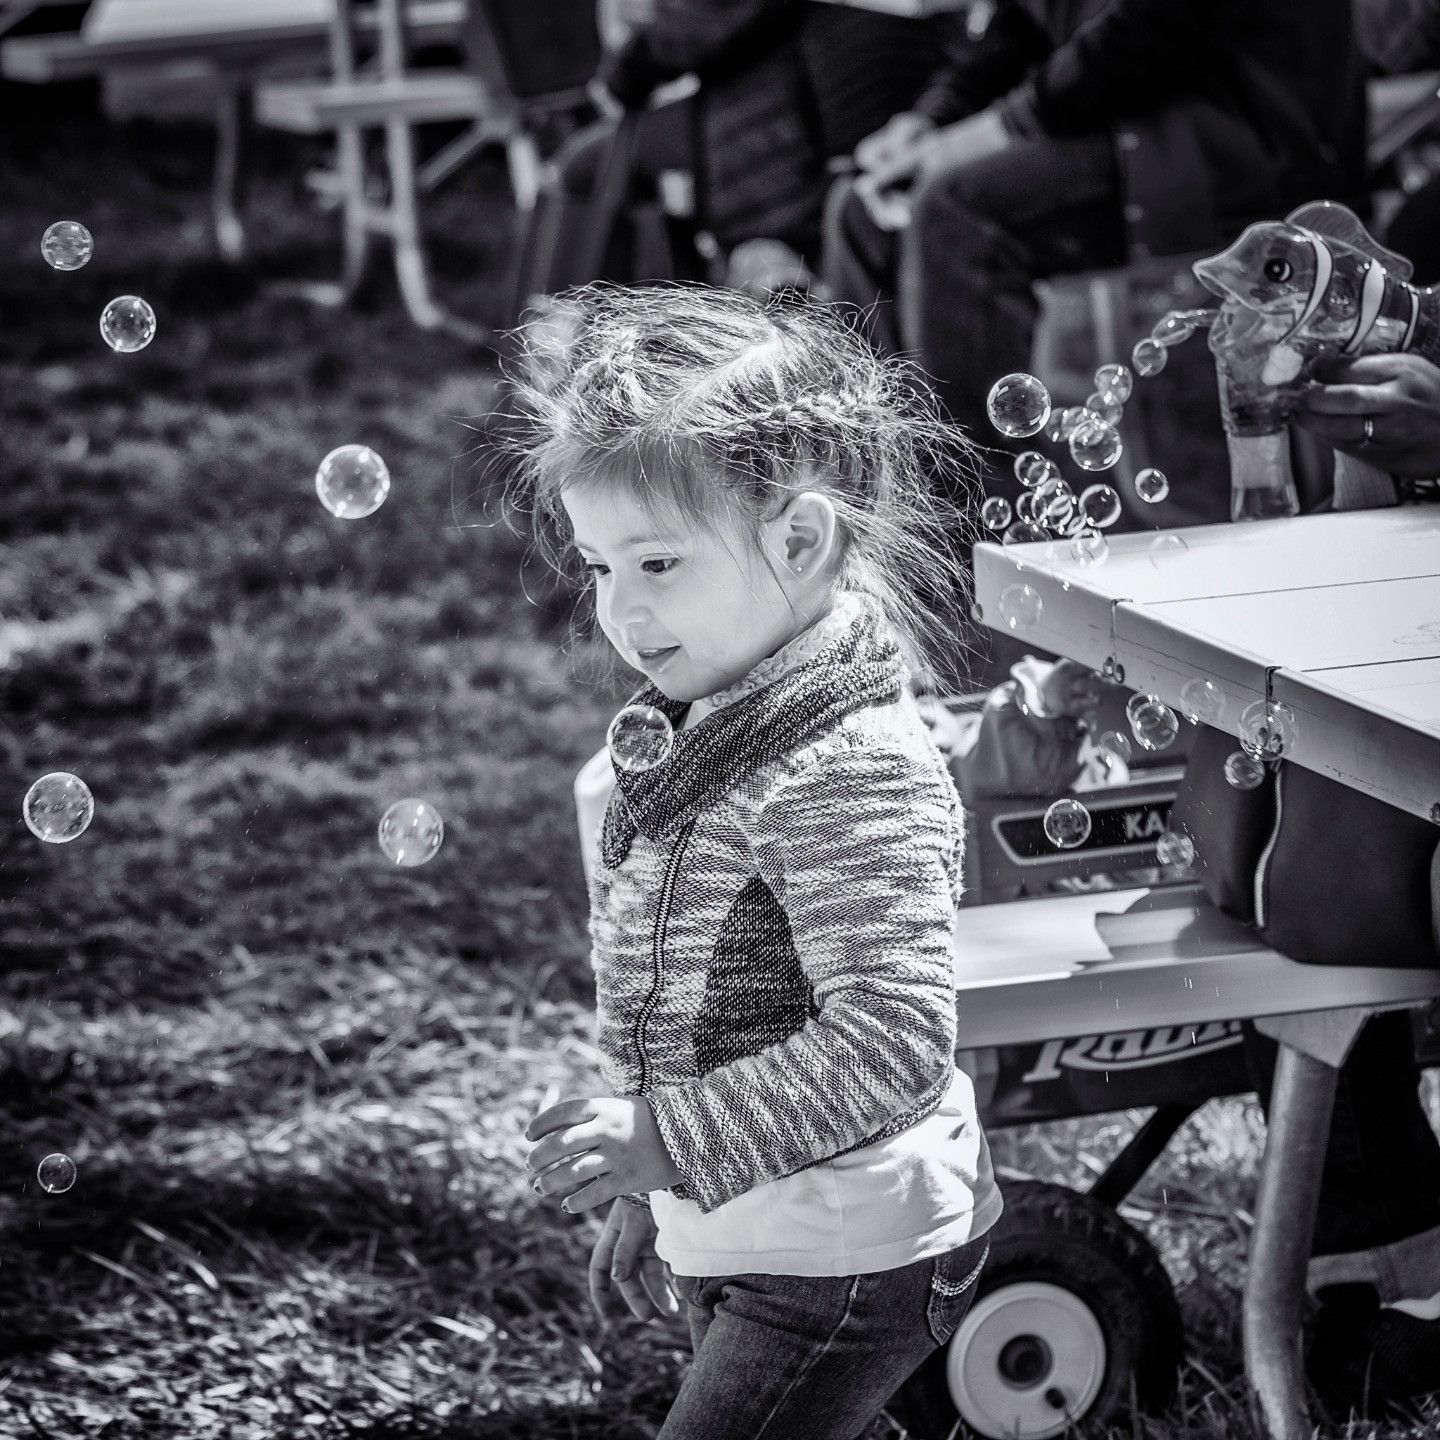 Little girl chasing soap bubbles